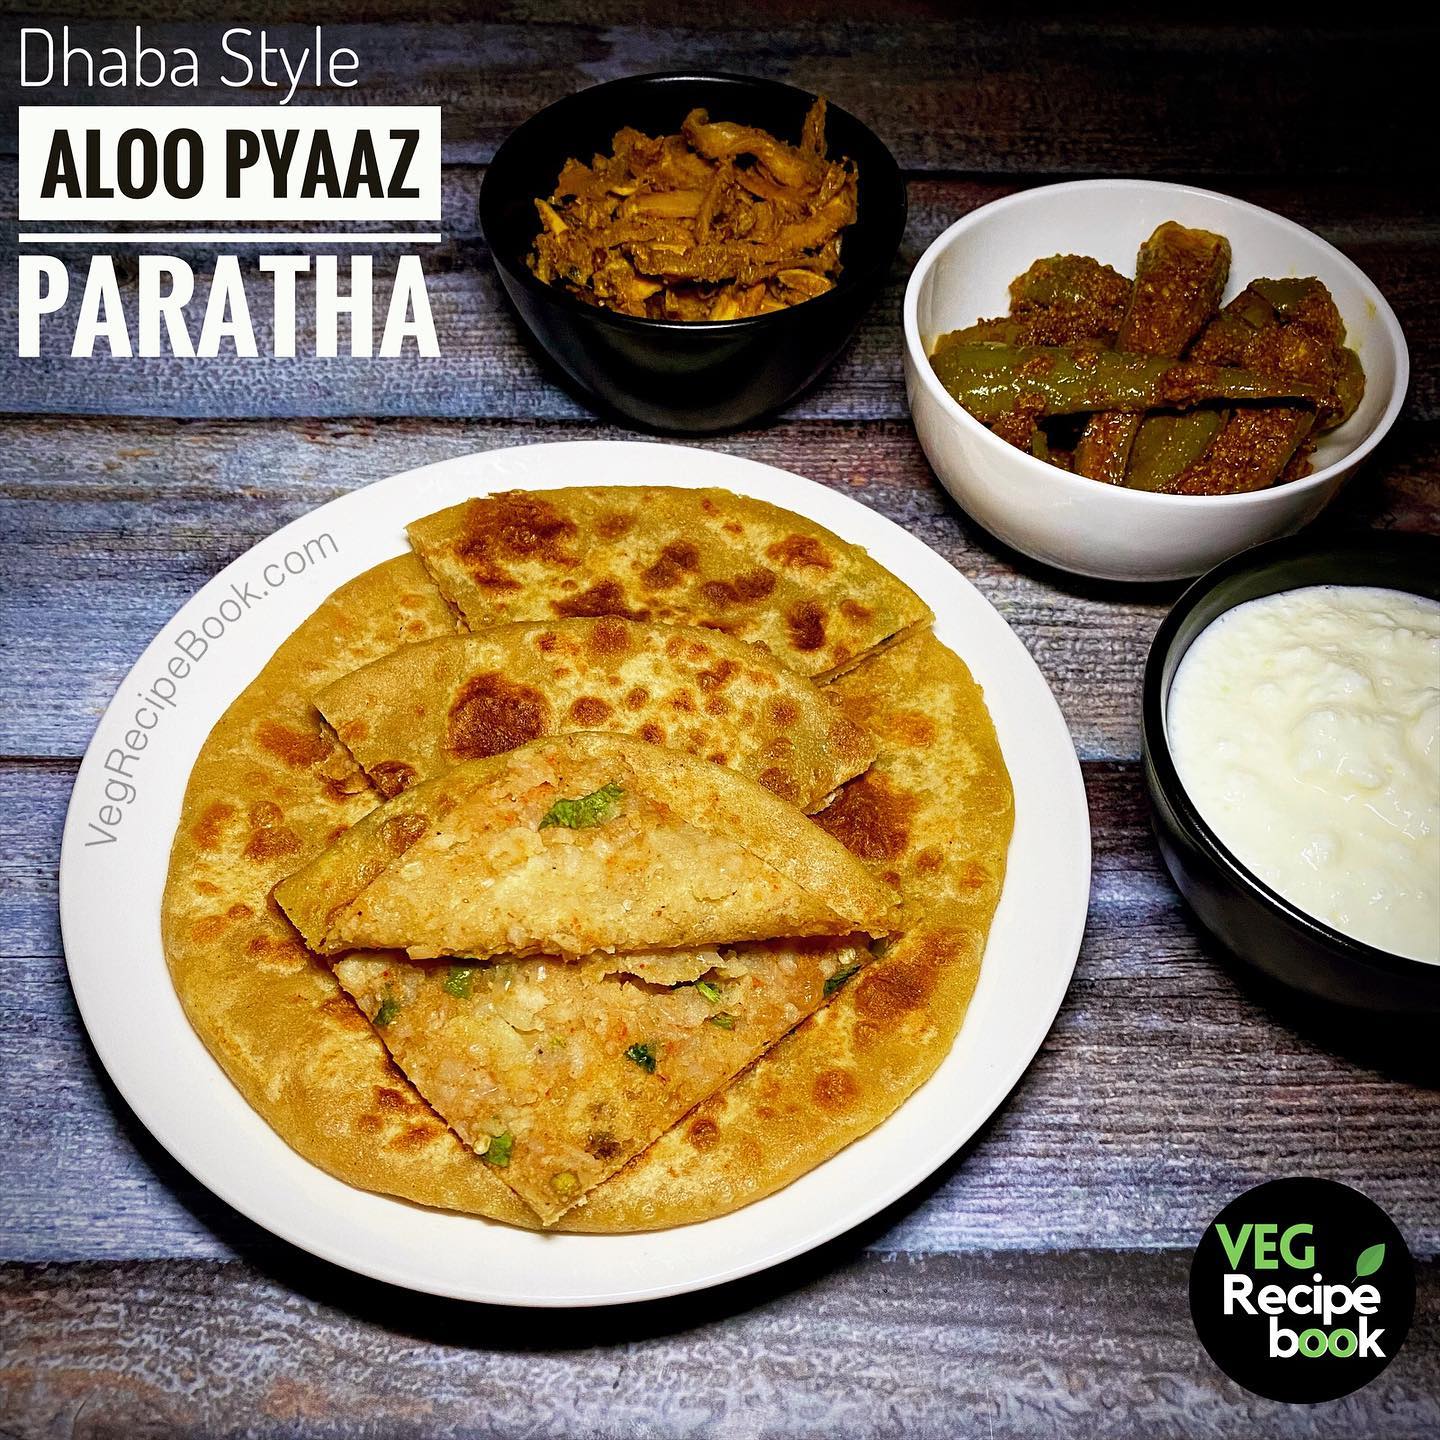 Aloo Pyaaz Paratha Recipe - Dhaba style😋 
Step by Step Recipe: https://vegrecipebook.com/aloo-pyaaz-paratha-recipe/ 
.
✅clickable recipe Link in Bio @thevegrecipebook 
.
.
Follow me @thevegrecipebook for more recipes.
.
.
#aloopyaazparantha #aloopyazparatha #stuffedparatha #aloopyajparatha #dhabafood #dhabastyle #aloopyaaz #paratha #parathas #paratharecipes #paratharecipe #vegrecipebook #itsmegrd #garuskitchen #easyrecipes #recipevideo #recipeshare #tandooriparatha #videorecipe #recipecreator #quickrecipes #homechef #homecooking #homemadeparatha #homemadefoodswithlove❤️ #cookingwithpassion #cookingvideos #hindirecipe #hindirecipes #foodvideo